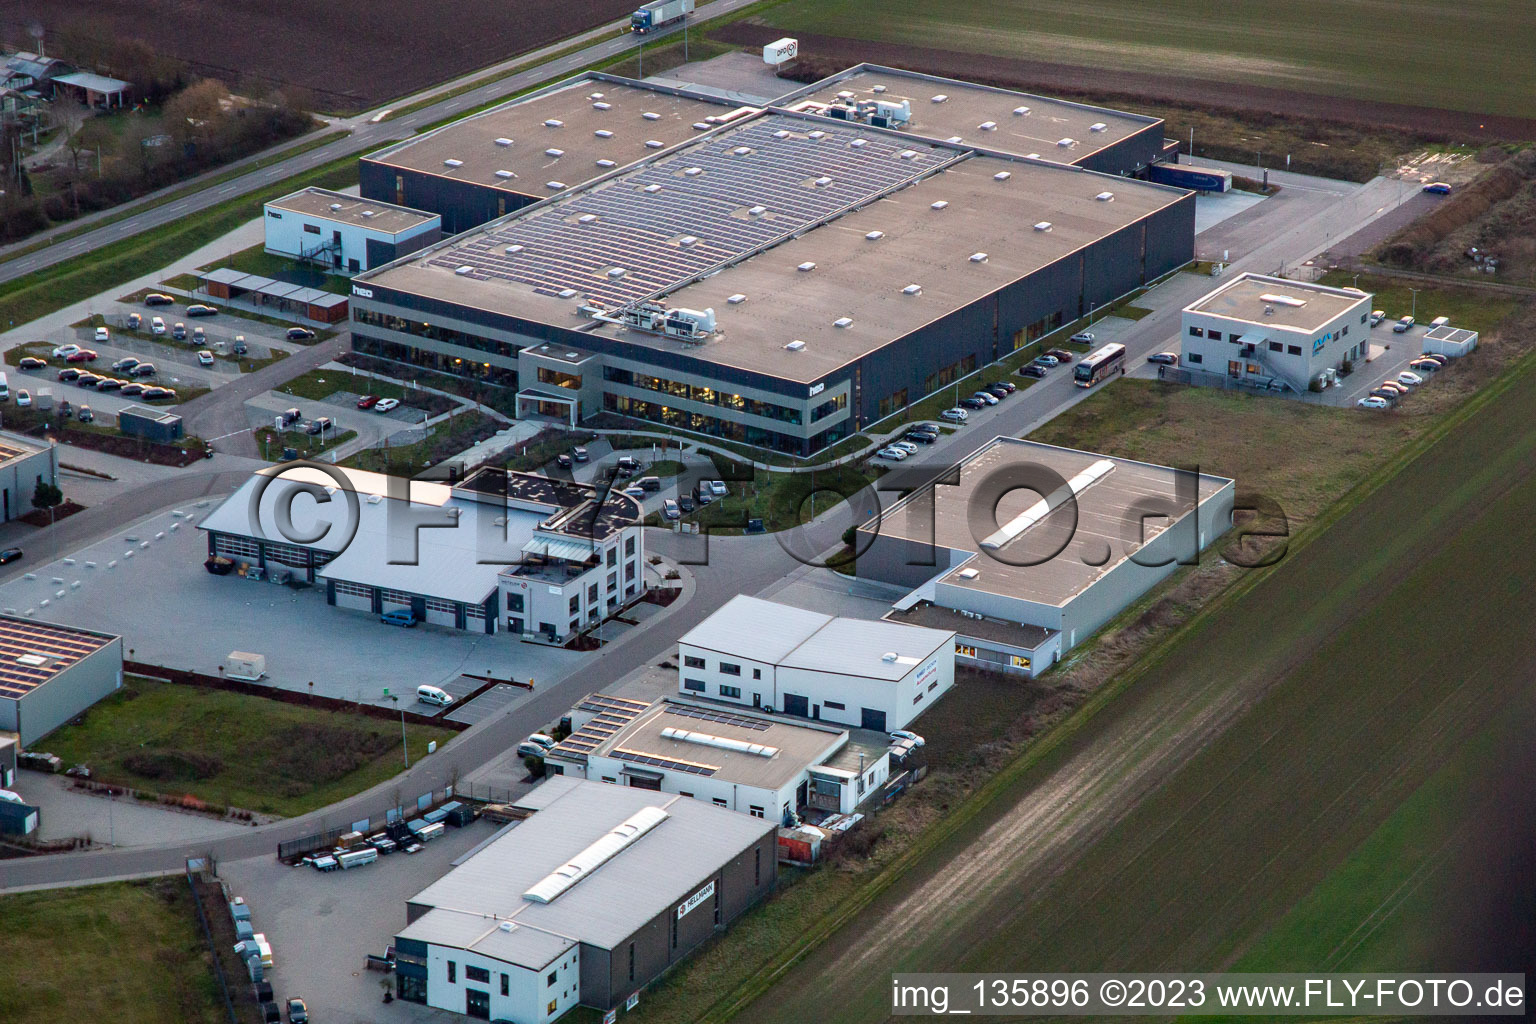 Aerial view of Heo GmbH in Herxheim bei Landau in the state Rhineland-Palatinate, Germany